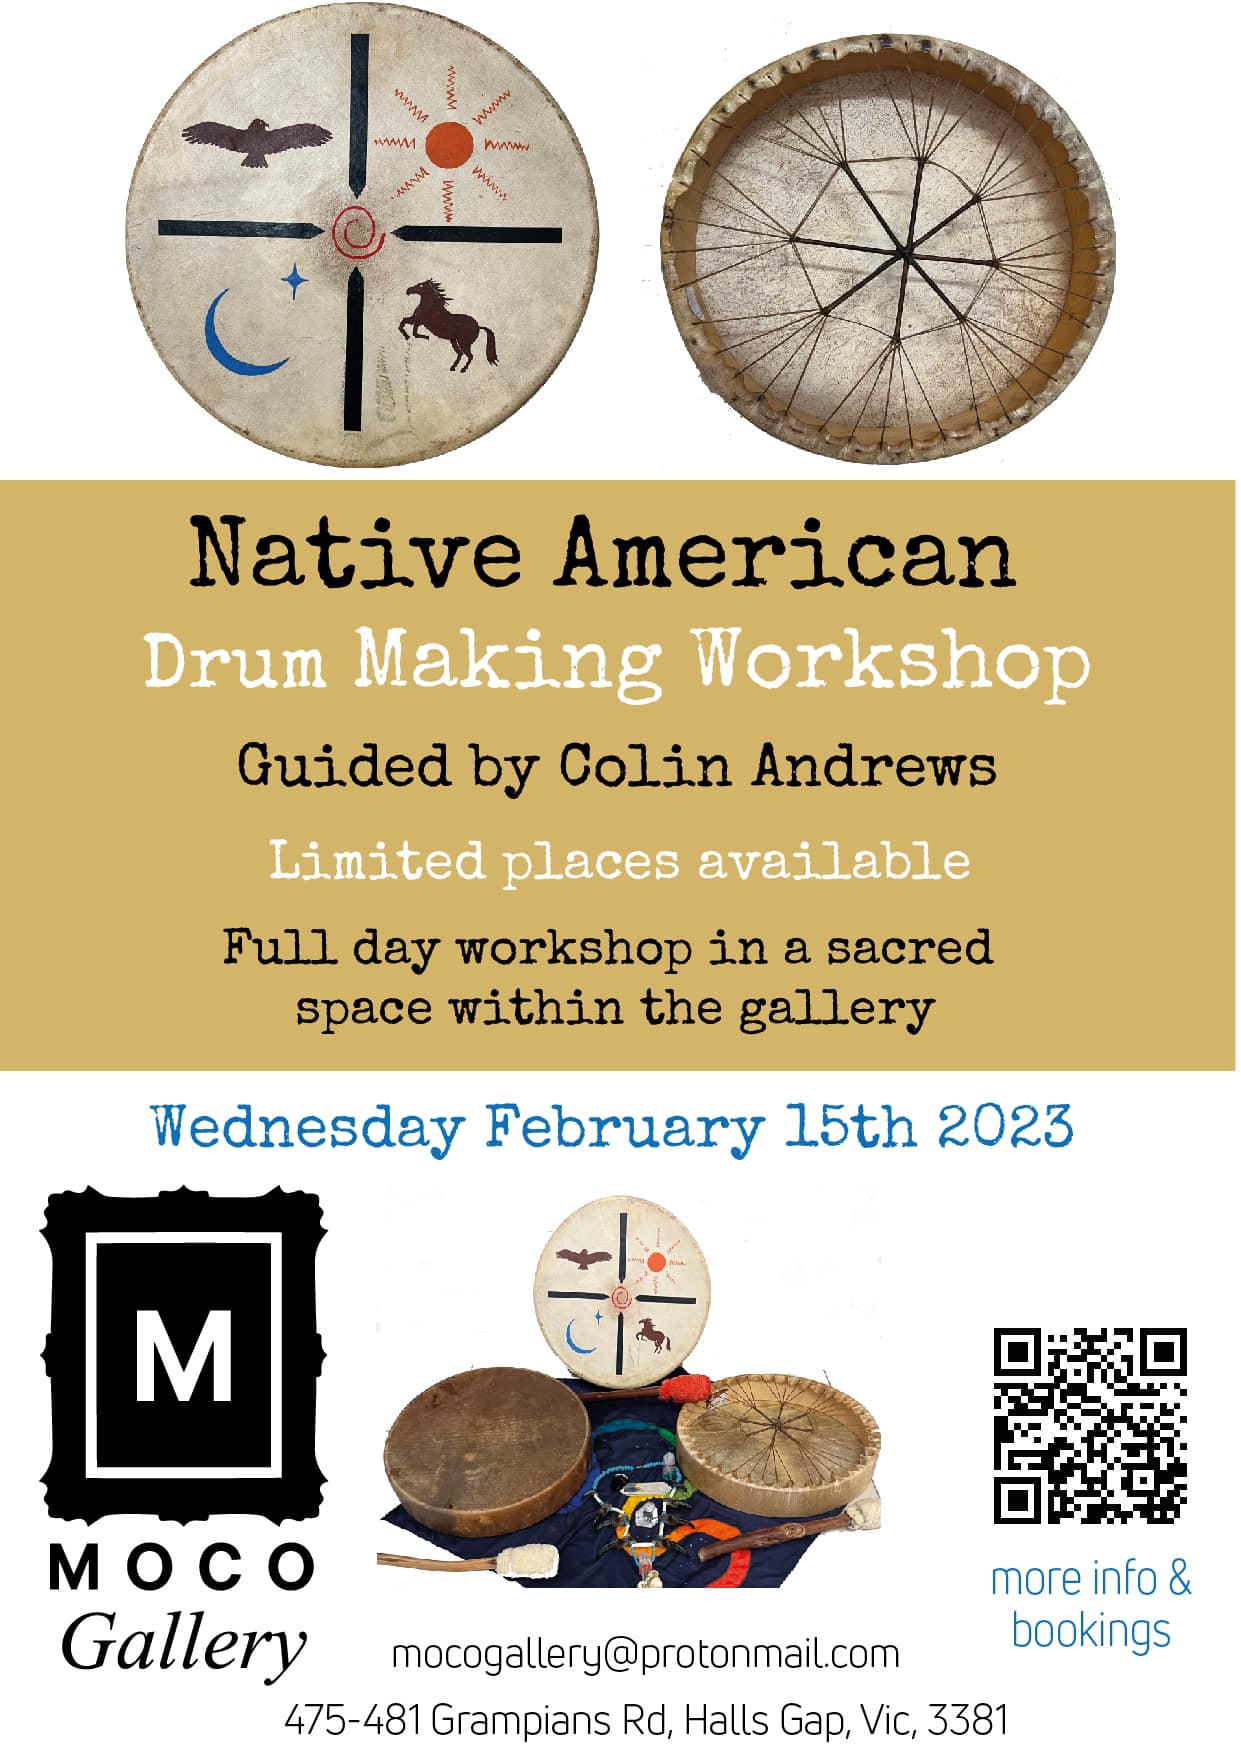 Drum Making Workshop flyer